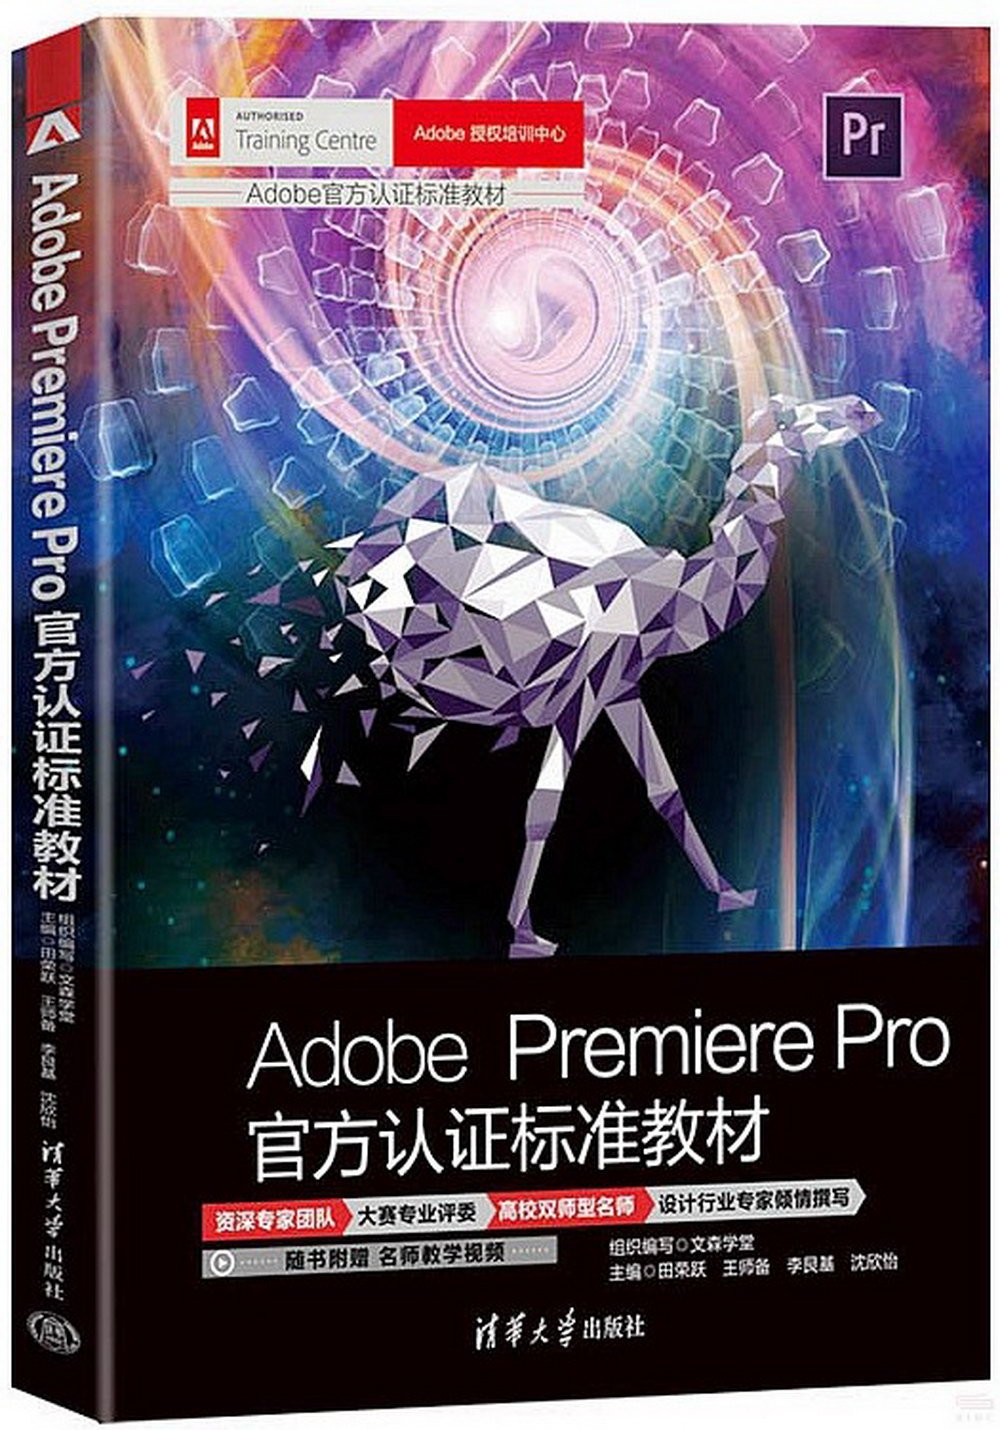 Adobe Premiere Pro官方認證標準教材